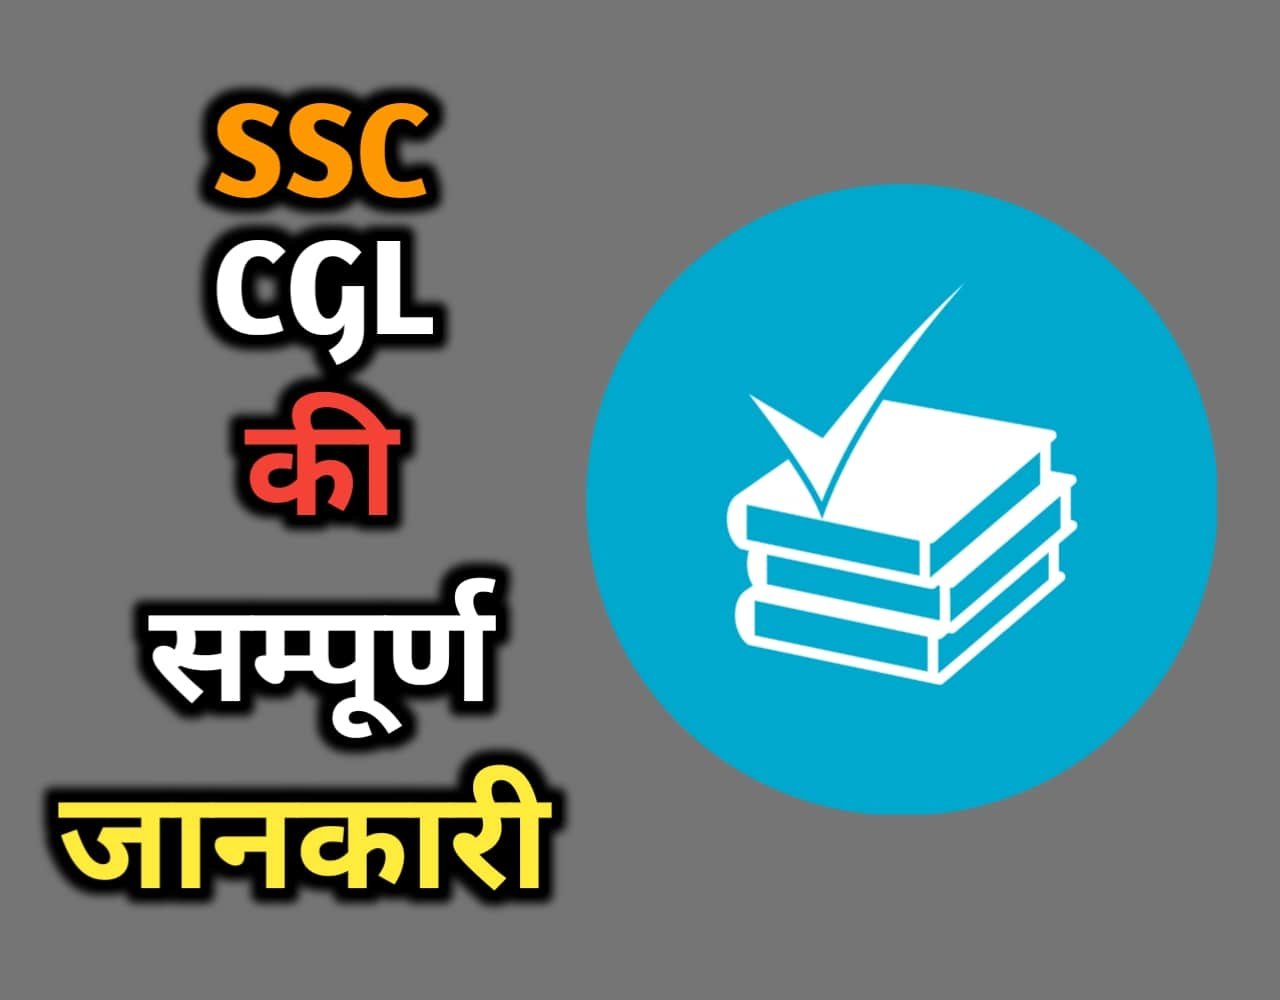 SSC CGL Details In Hindi | SSC CGL क्या है?